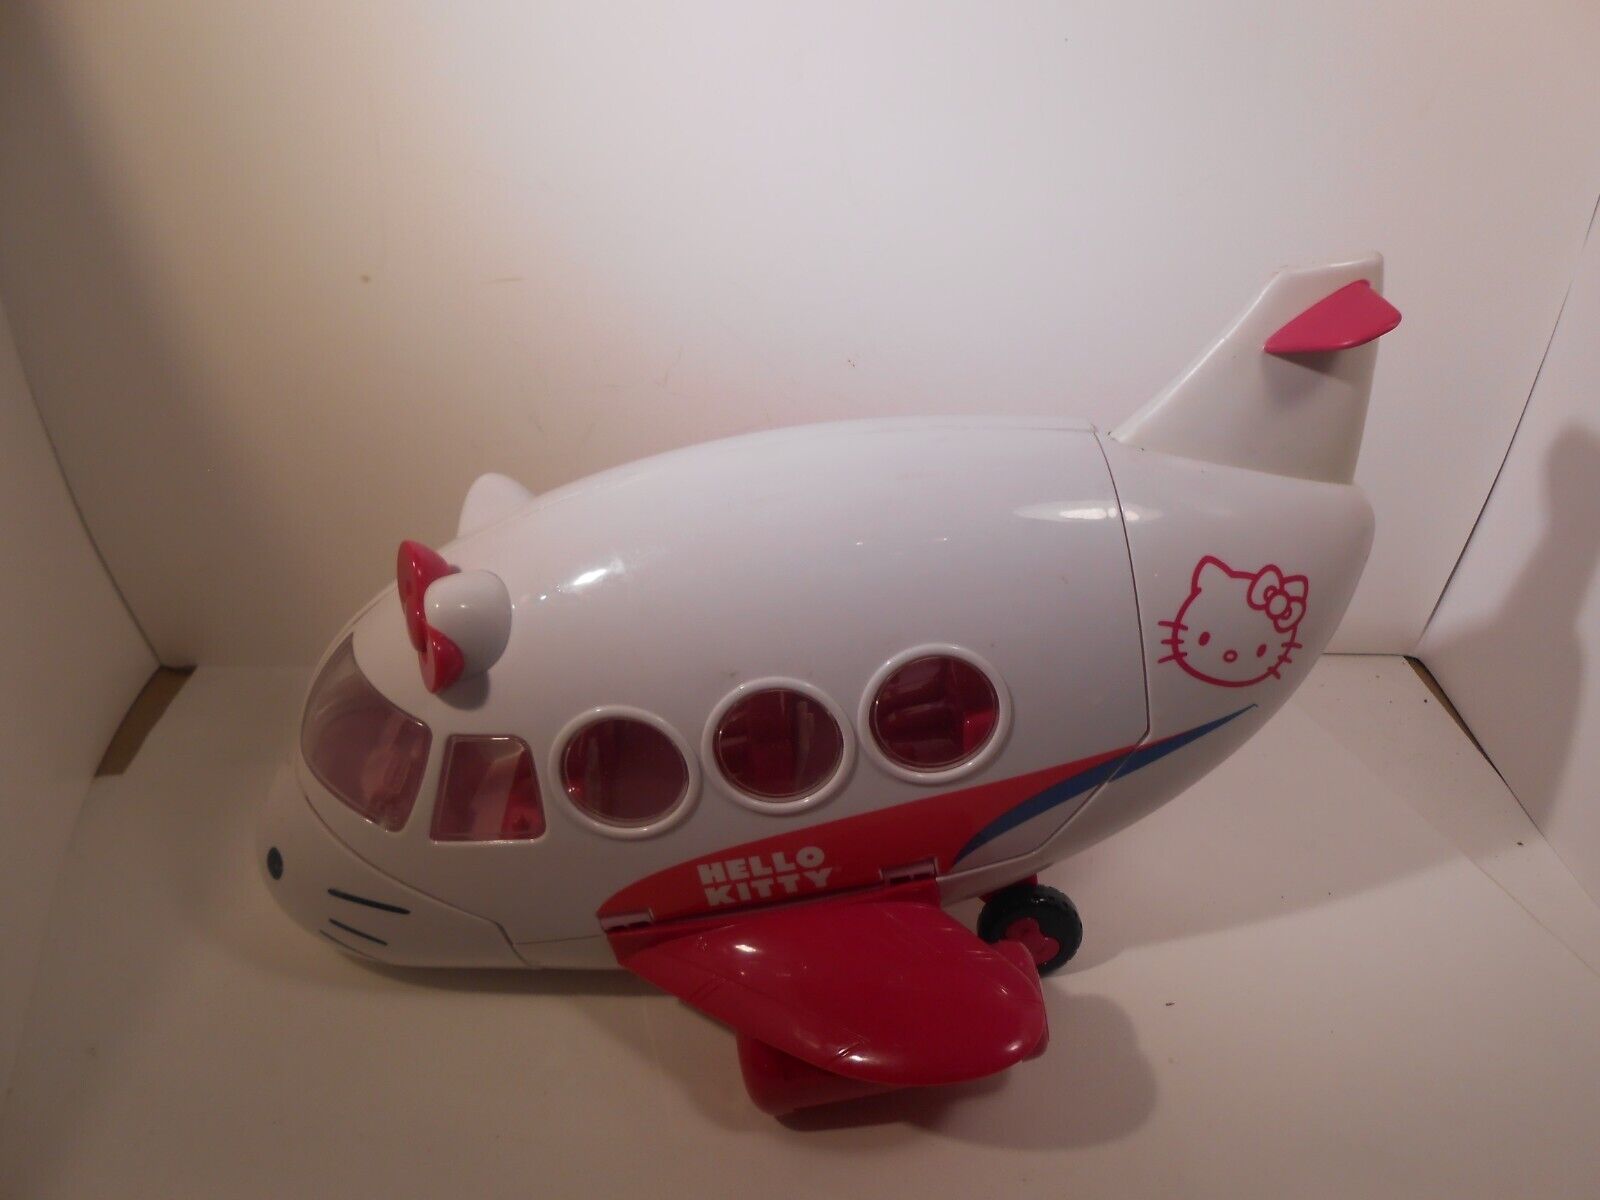 Primary image for Sanrio Hello Kitty Airline Pink White Plane 2019 Dear Daniel Figure Jada toys